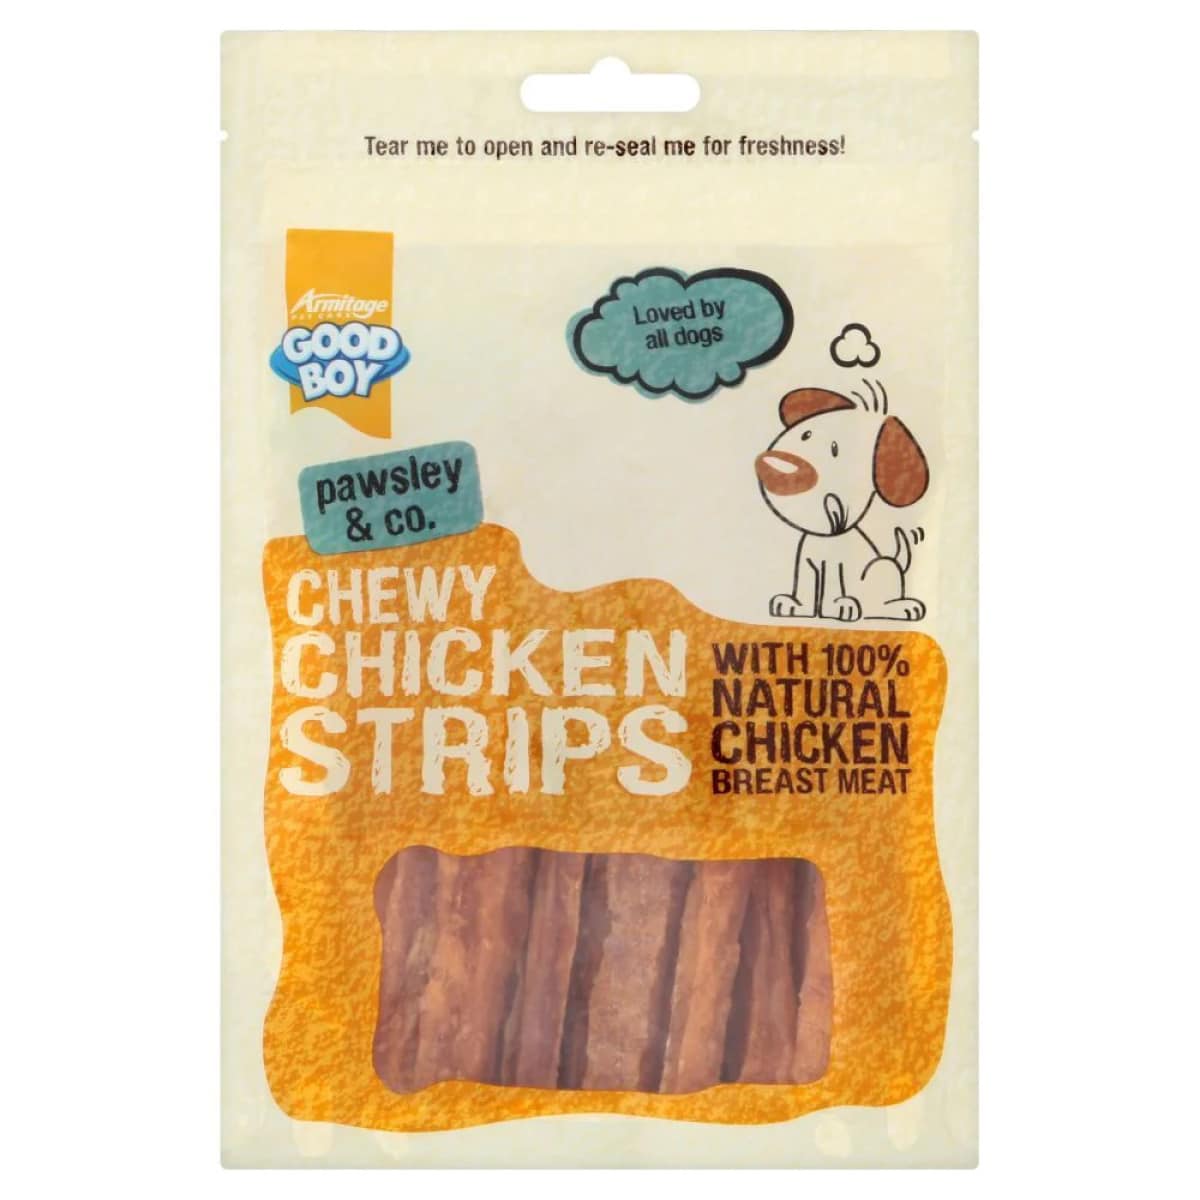 Good Boy Chewy Chicken Strips 100g Main Image